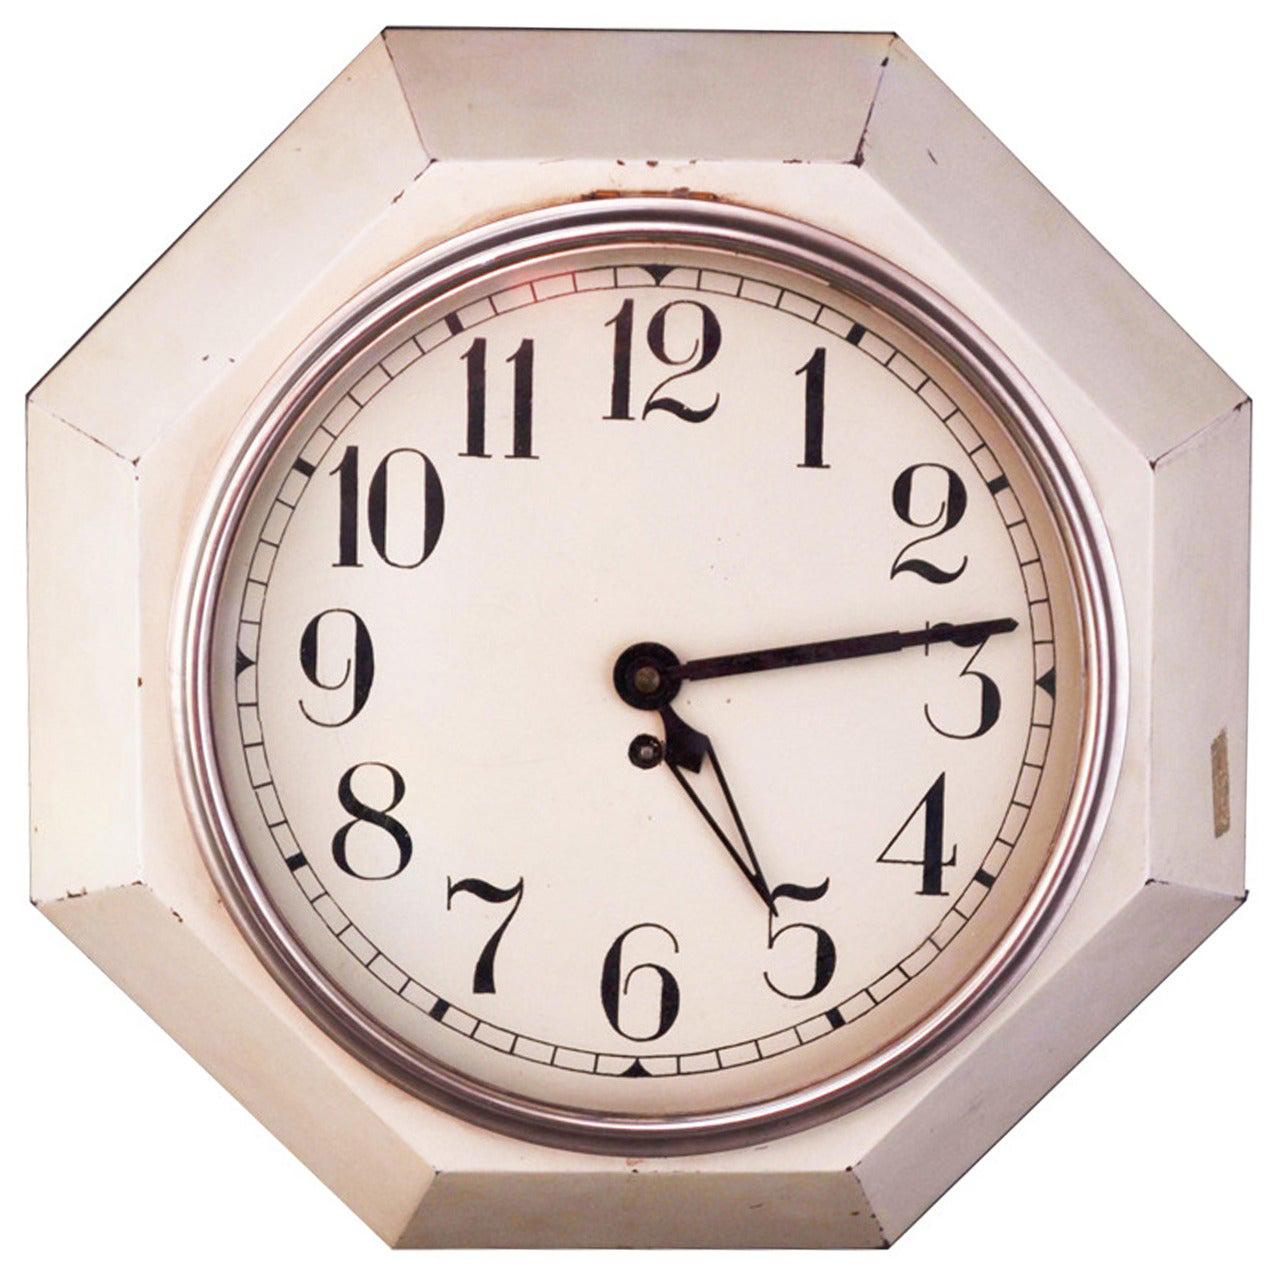 Original Art Deco Wall Clock by Adolf Loos Early 20th Century, Functioning